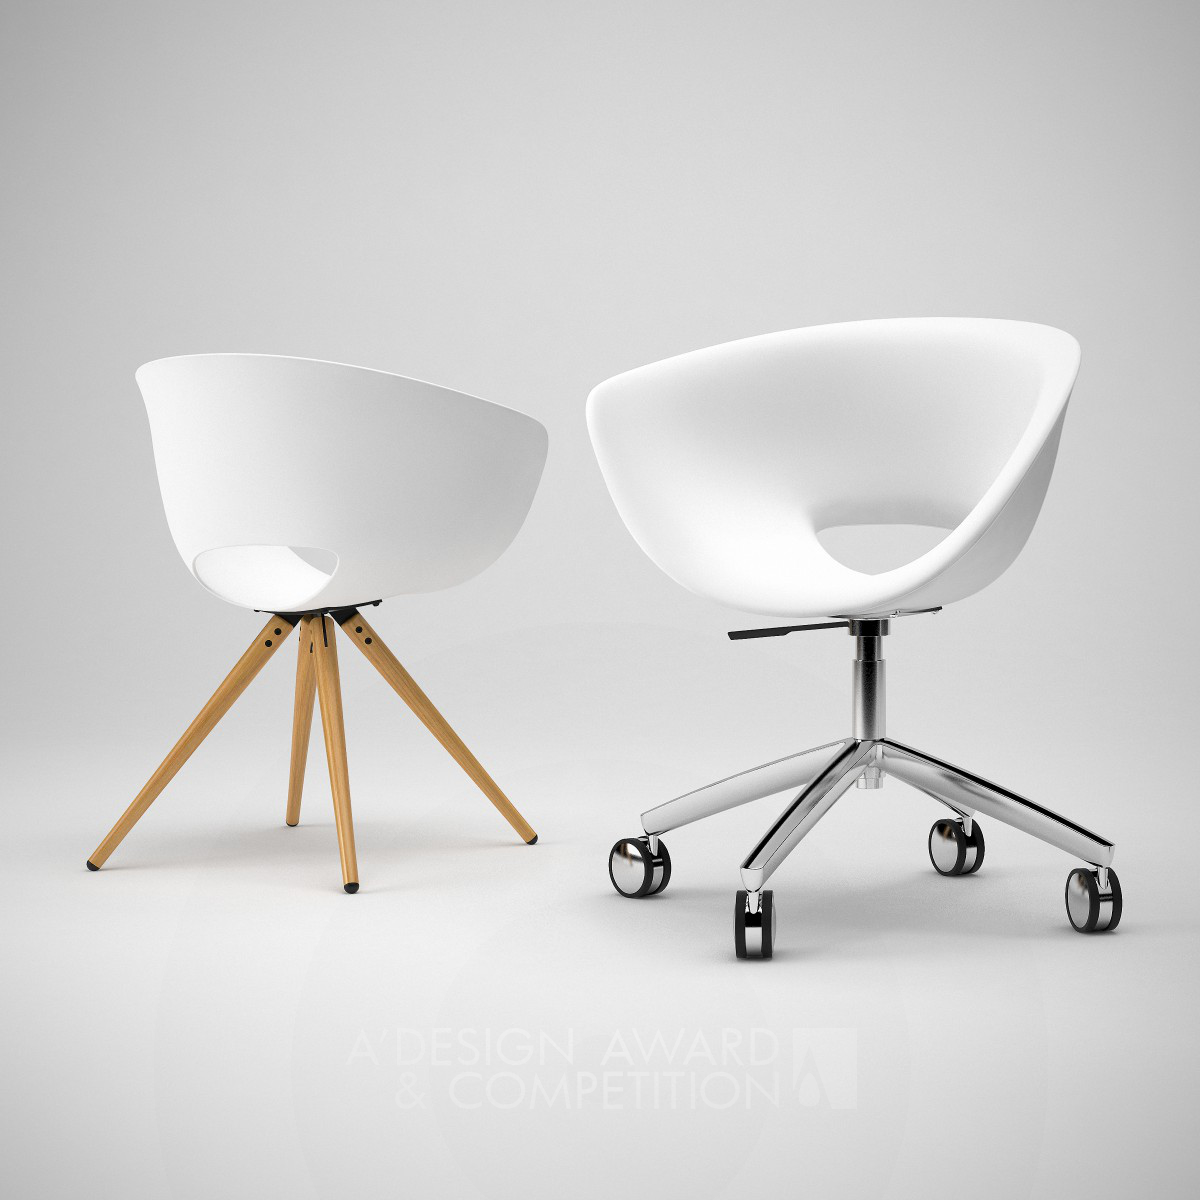 Bio Chair by Vladimir Zagorac Bronze Furniture Design Award Winner 2022 